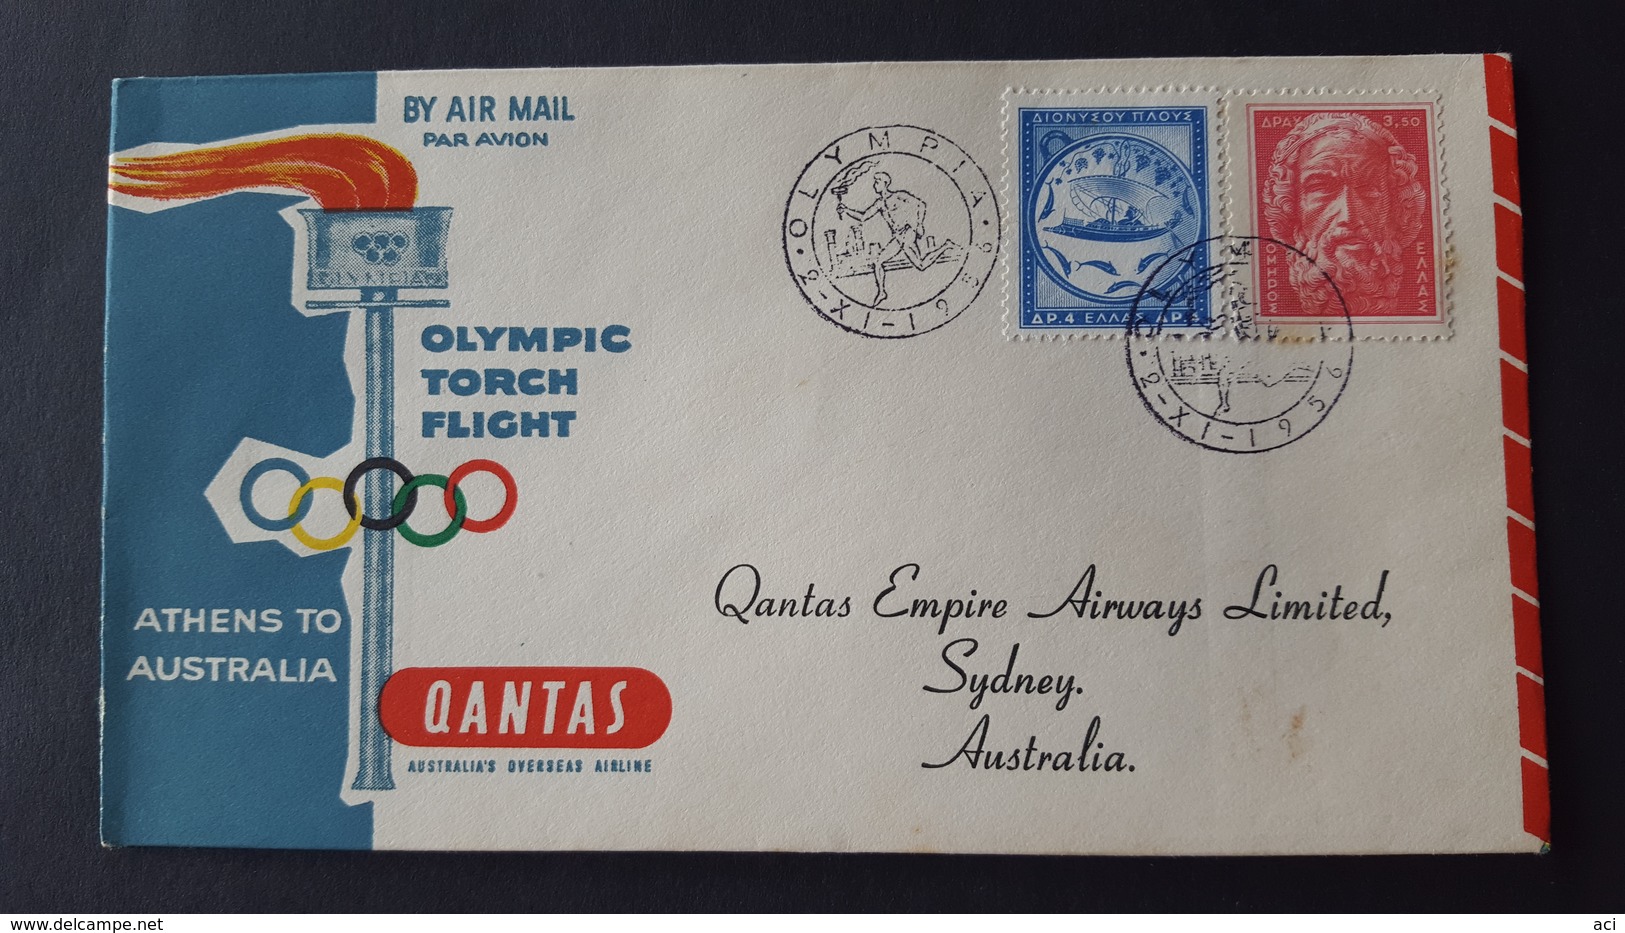 Australia 1956 Qantas Olympic Torch Flight Athens To Australia Souvenir Cover - Premiers Vols